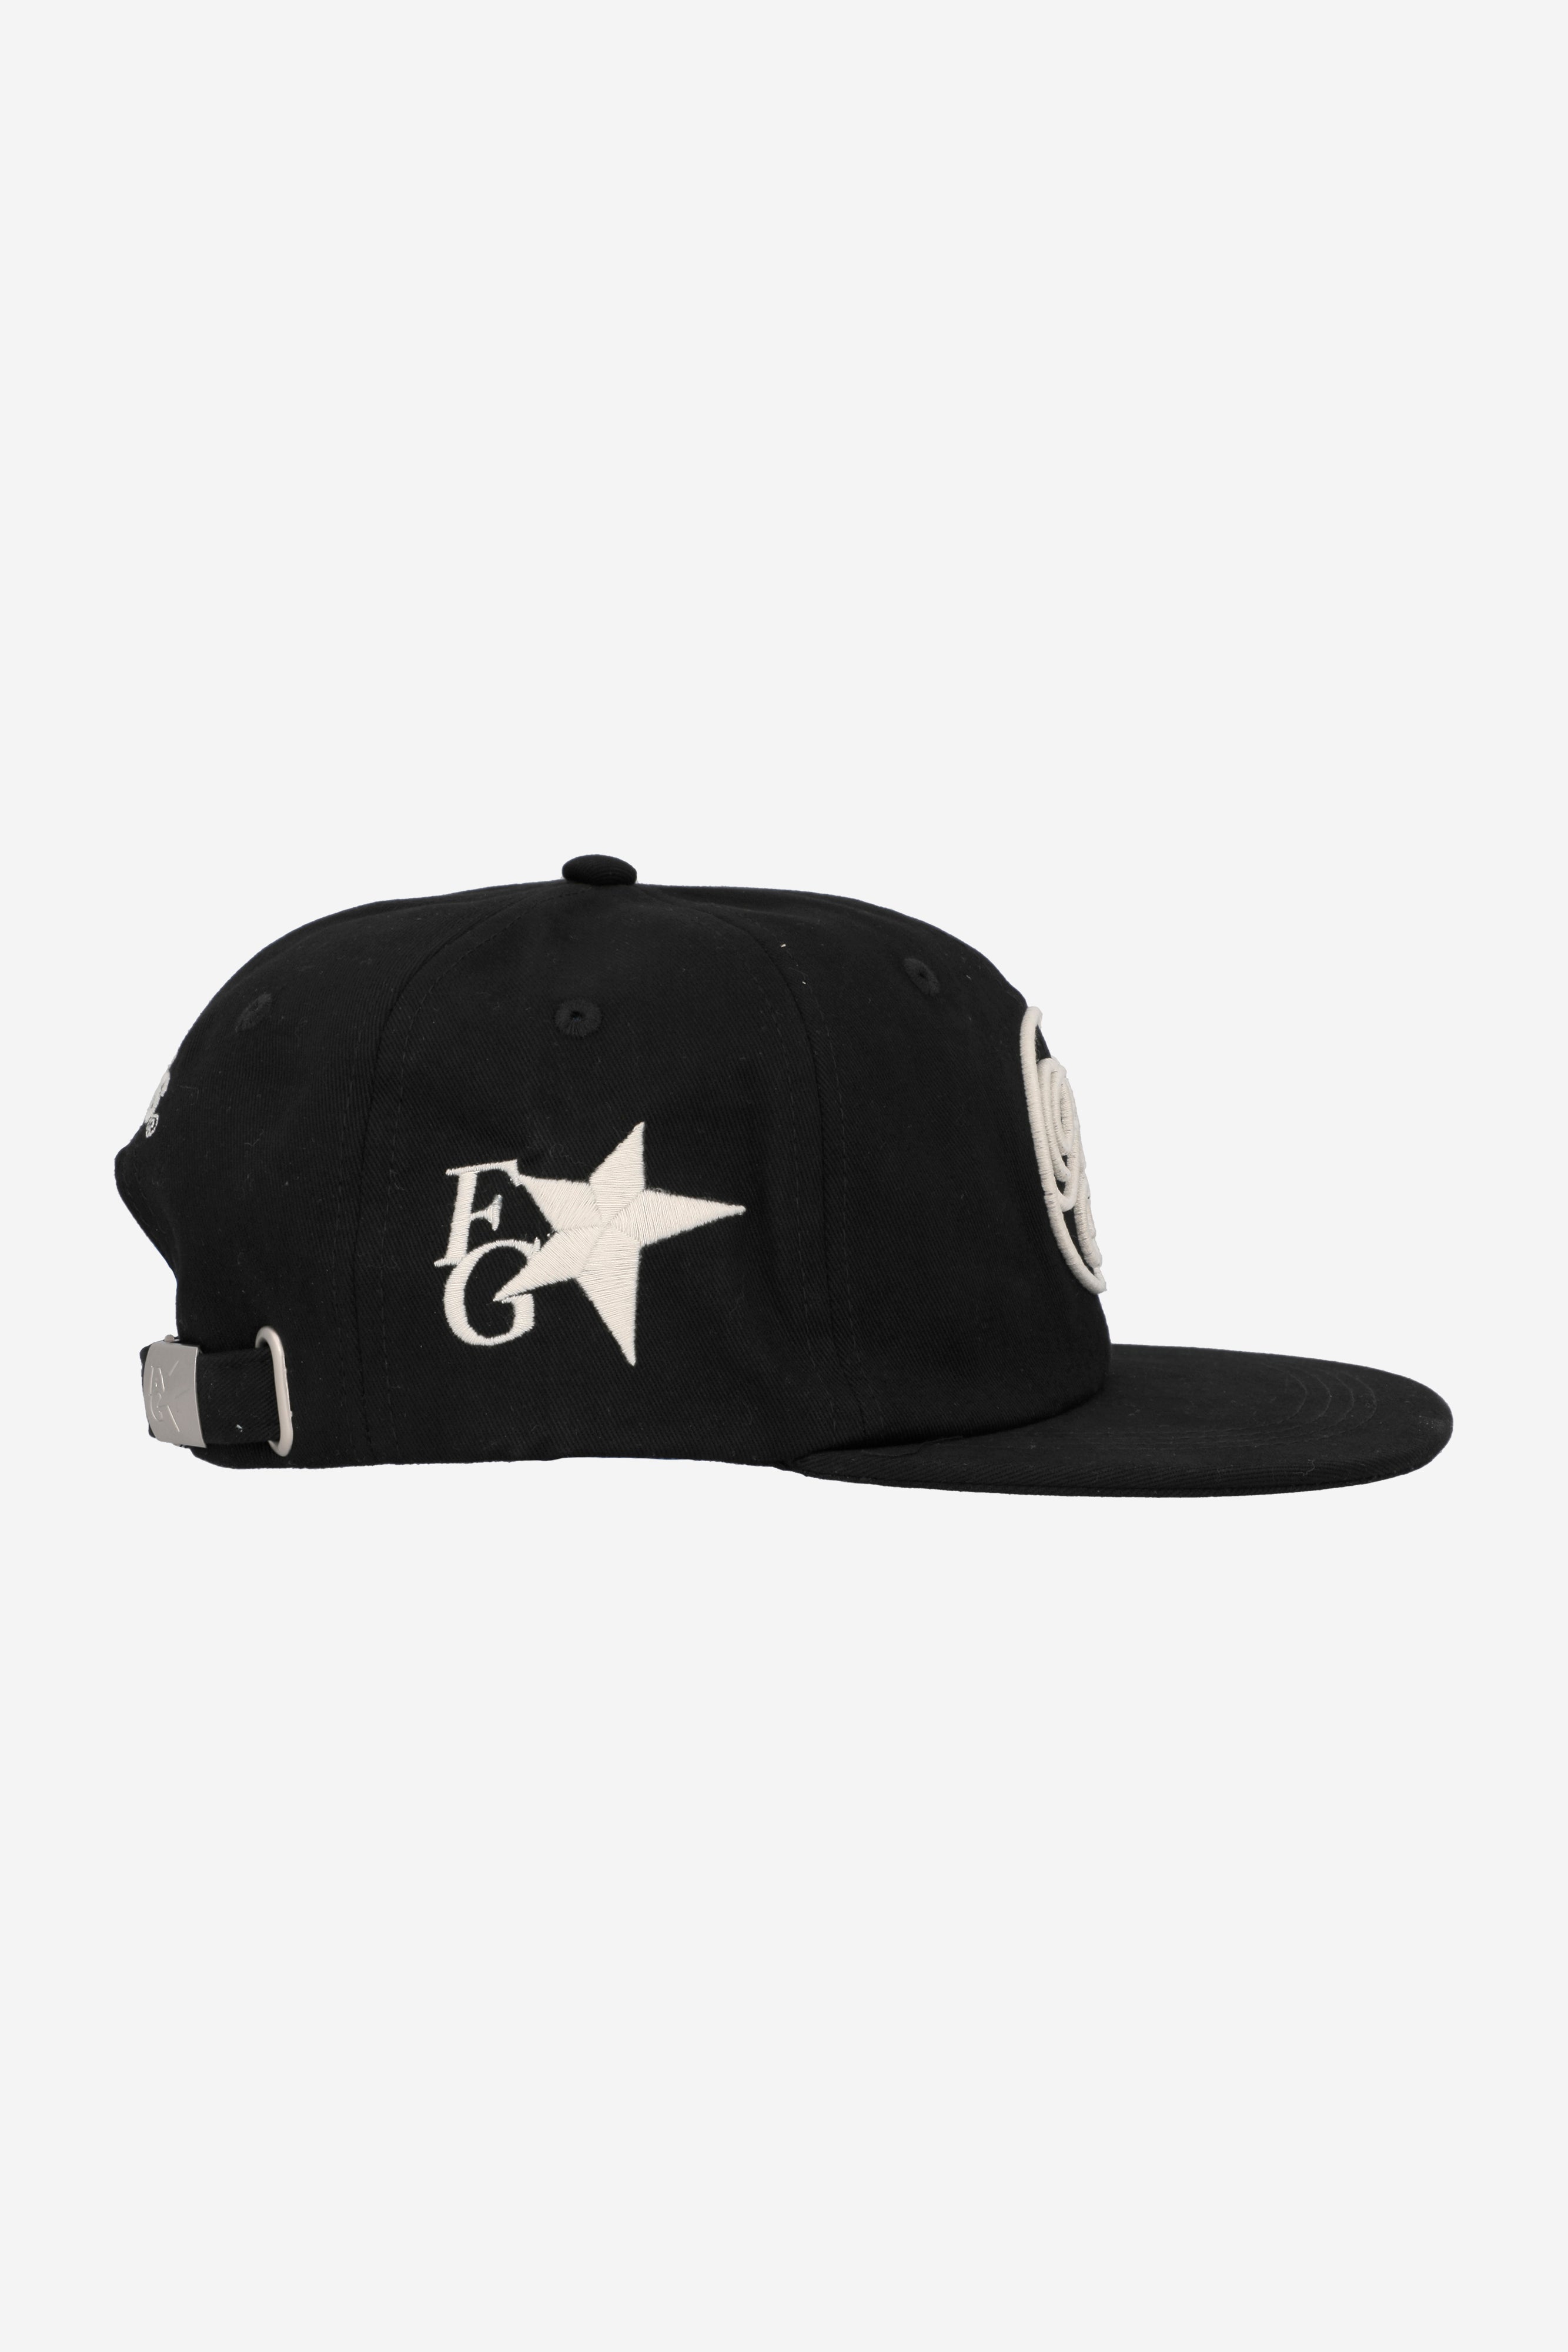 BLACKJACK CAP